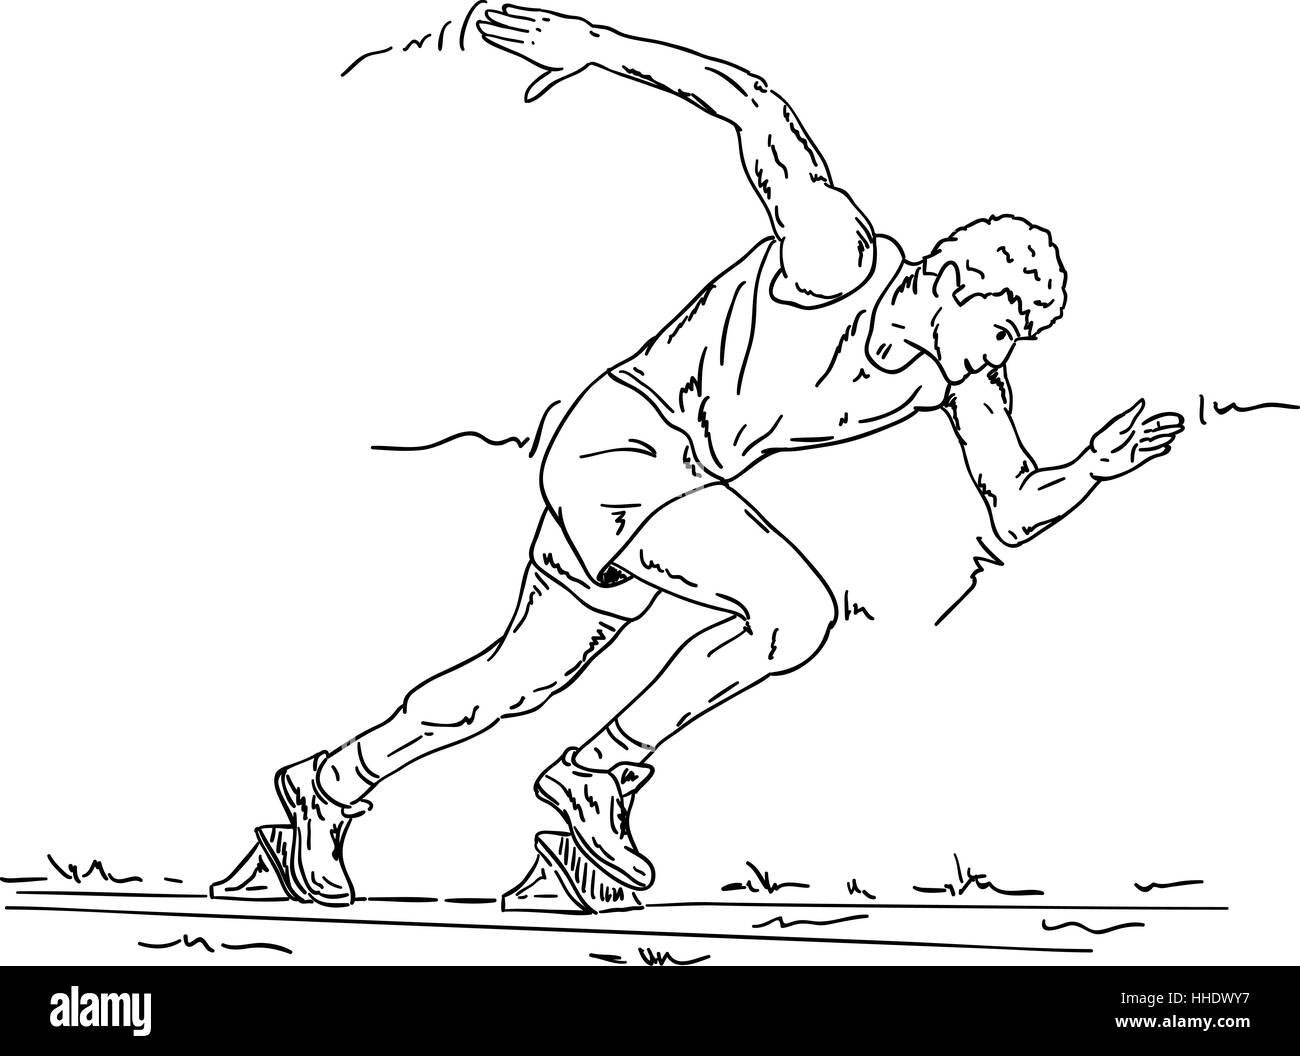 Рисунок бегуна спортсмена карандашом